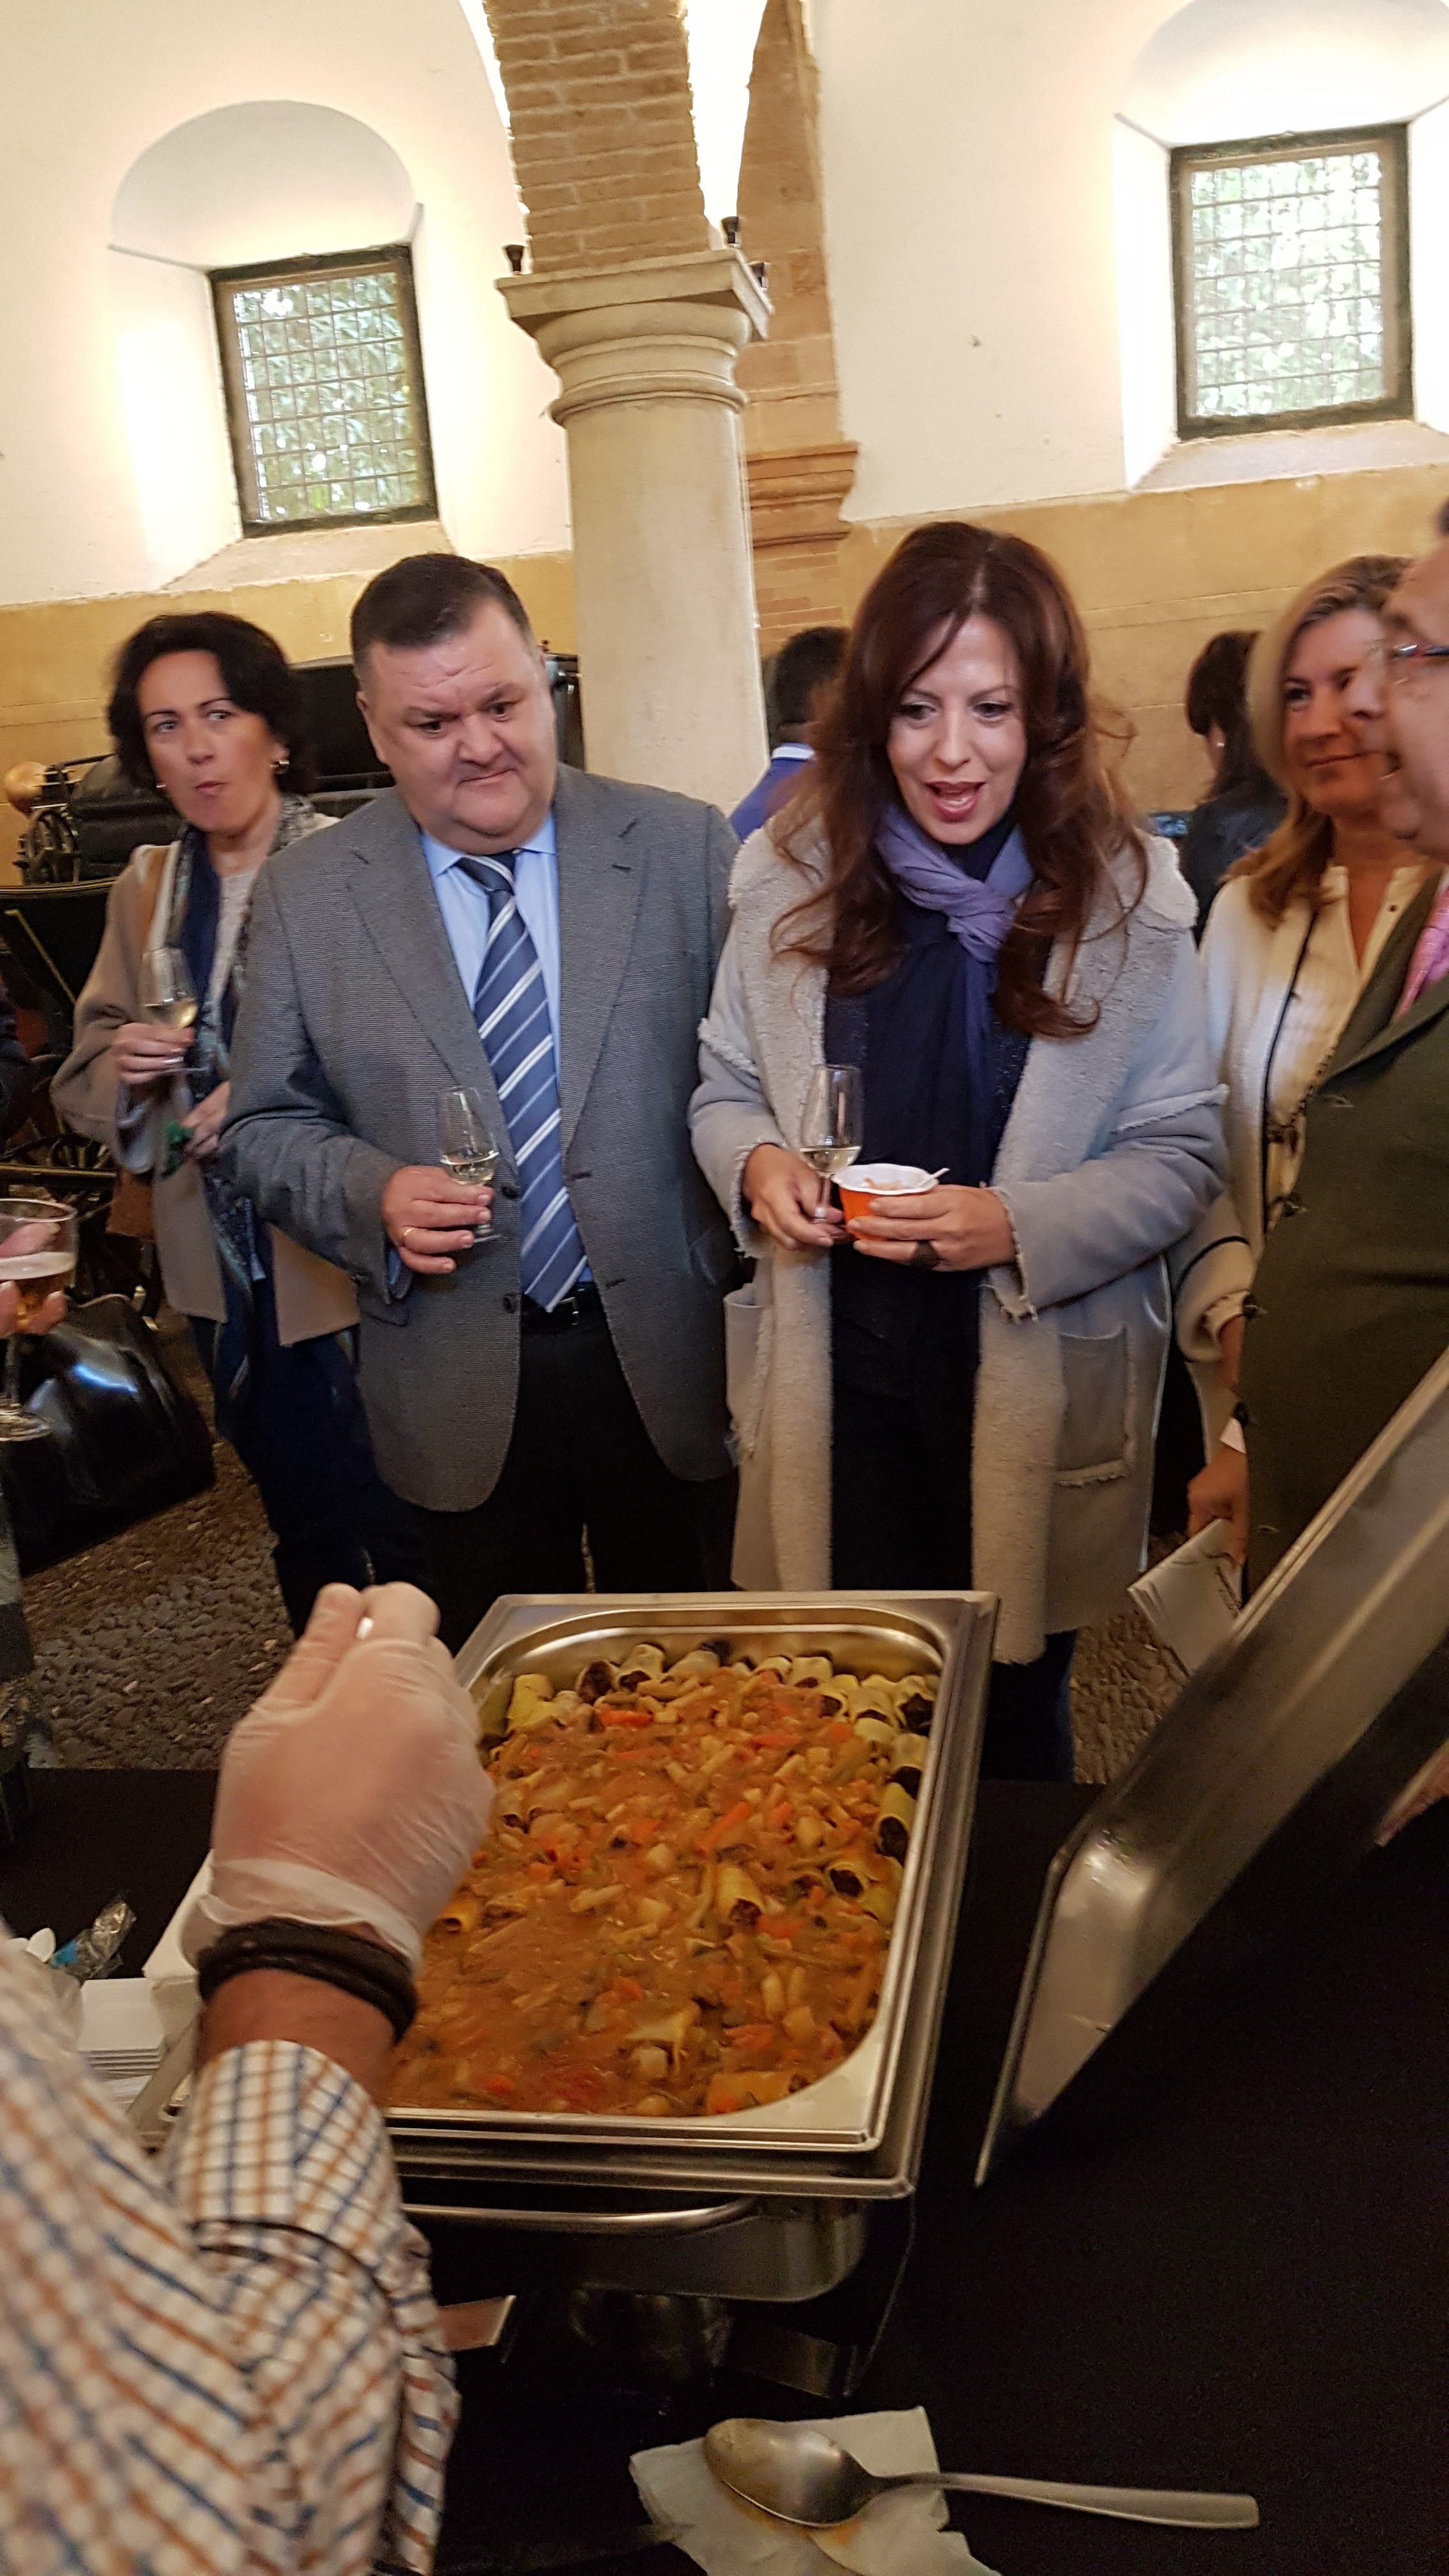 Evento organizado por la Cátedra de Gastronomía de Andalucía en Caballerizas reales